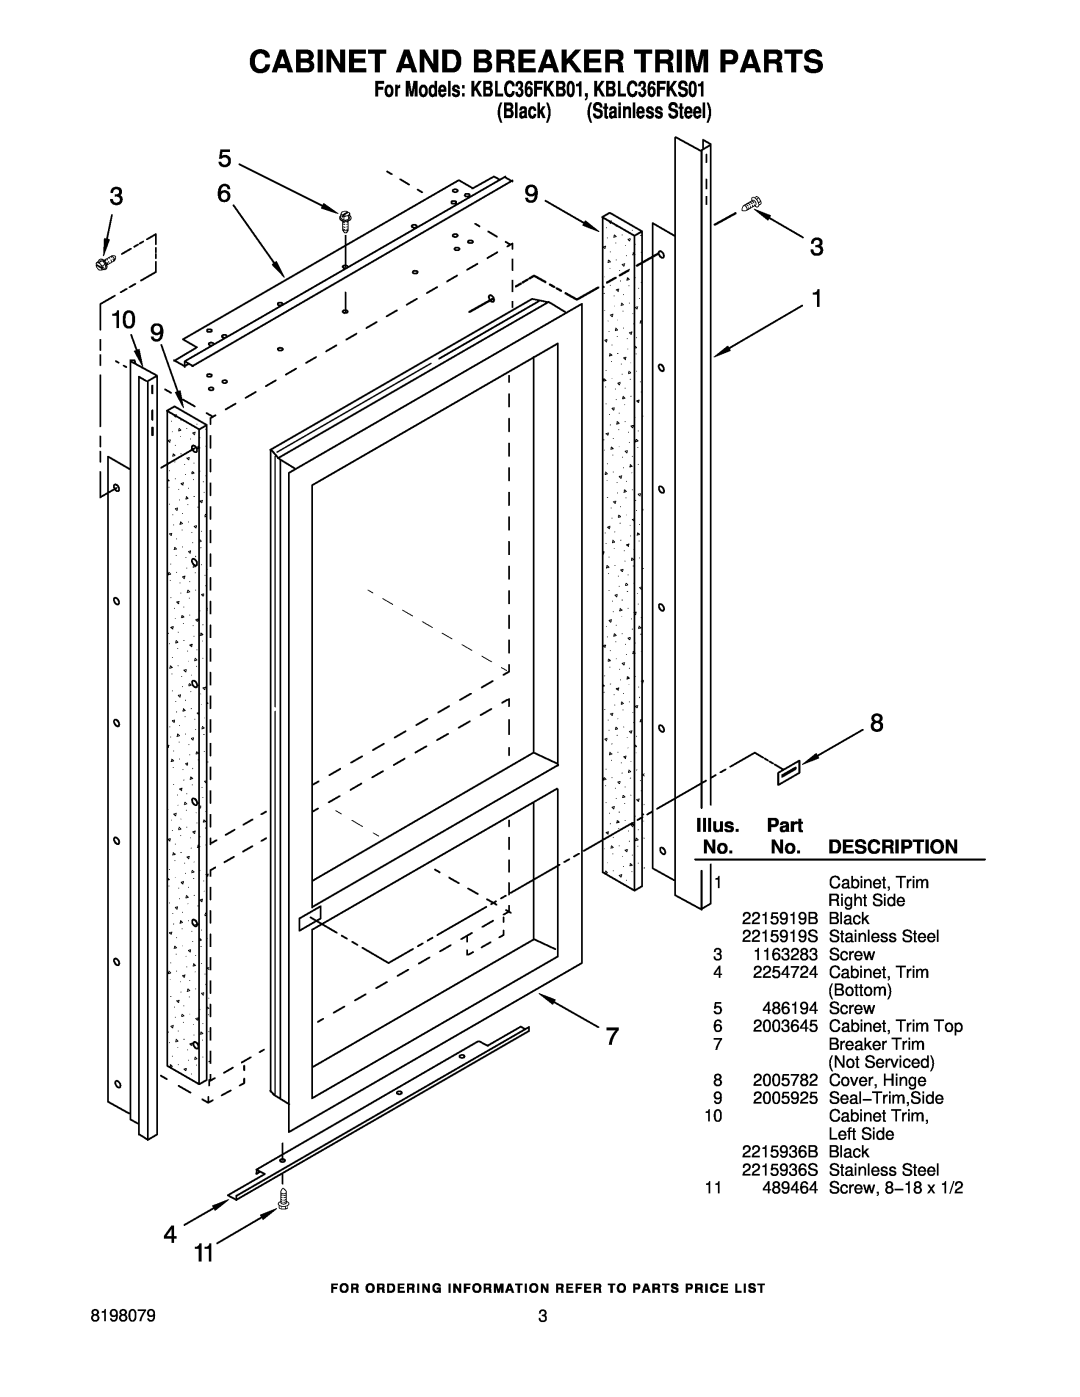 KitchenAid manual Cabinet And Breaker Trim Parts, For Models KBLC36FKB01, KBLC36FKS01, Black, Illus, Description 